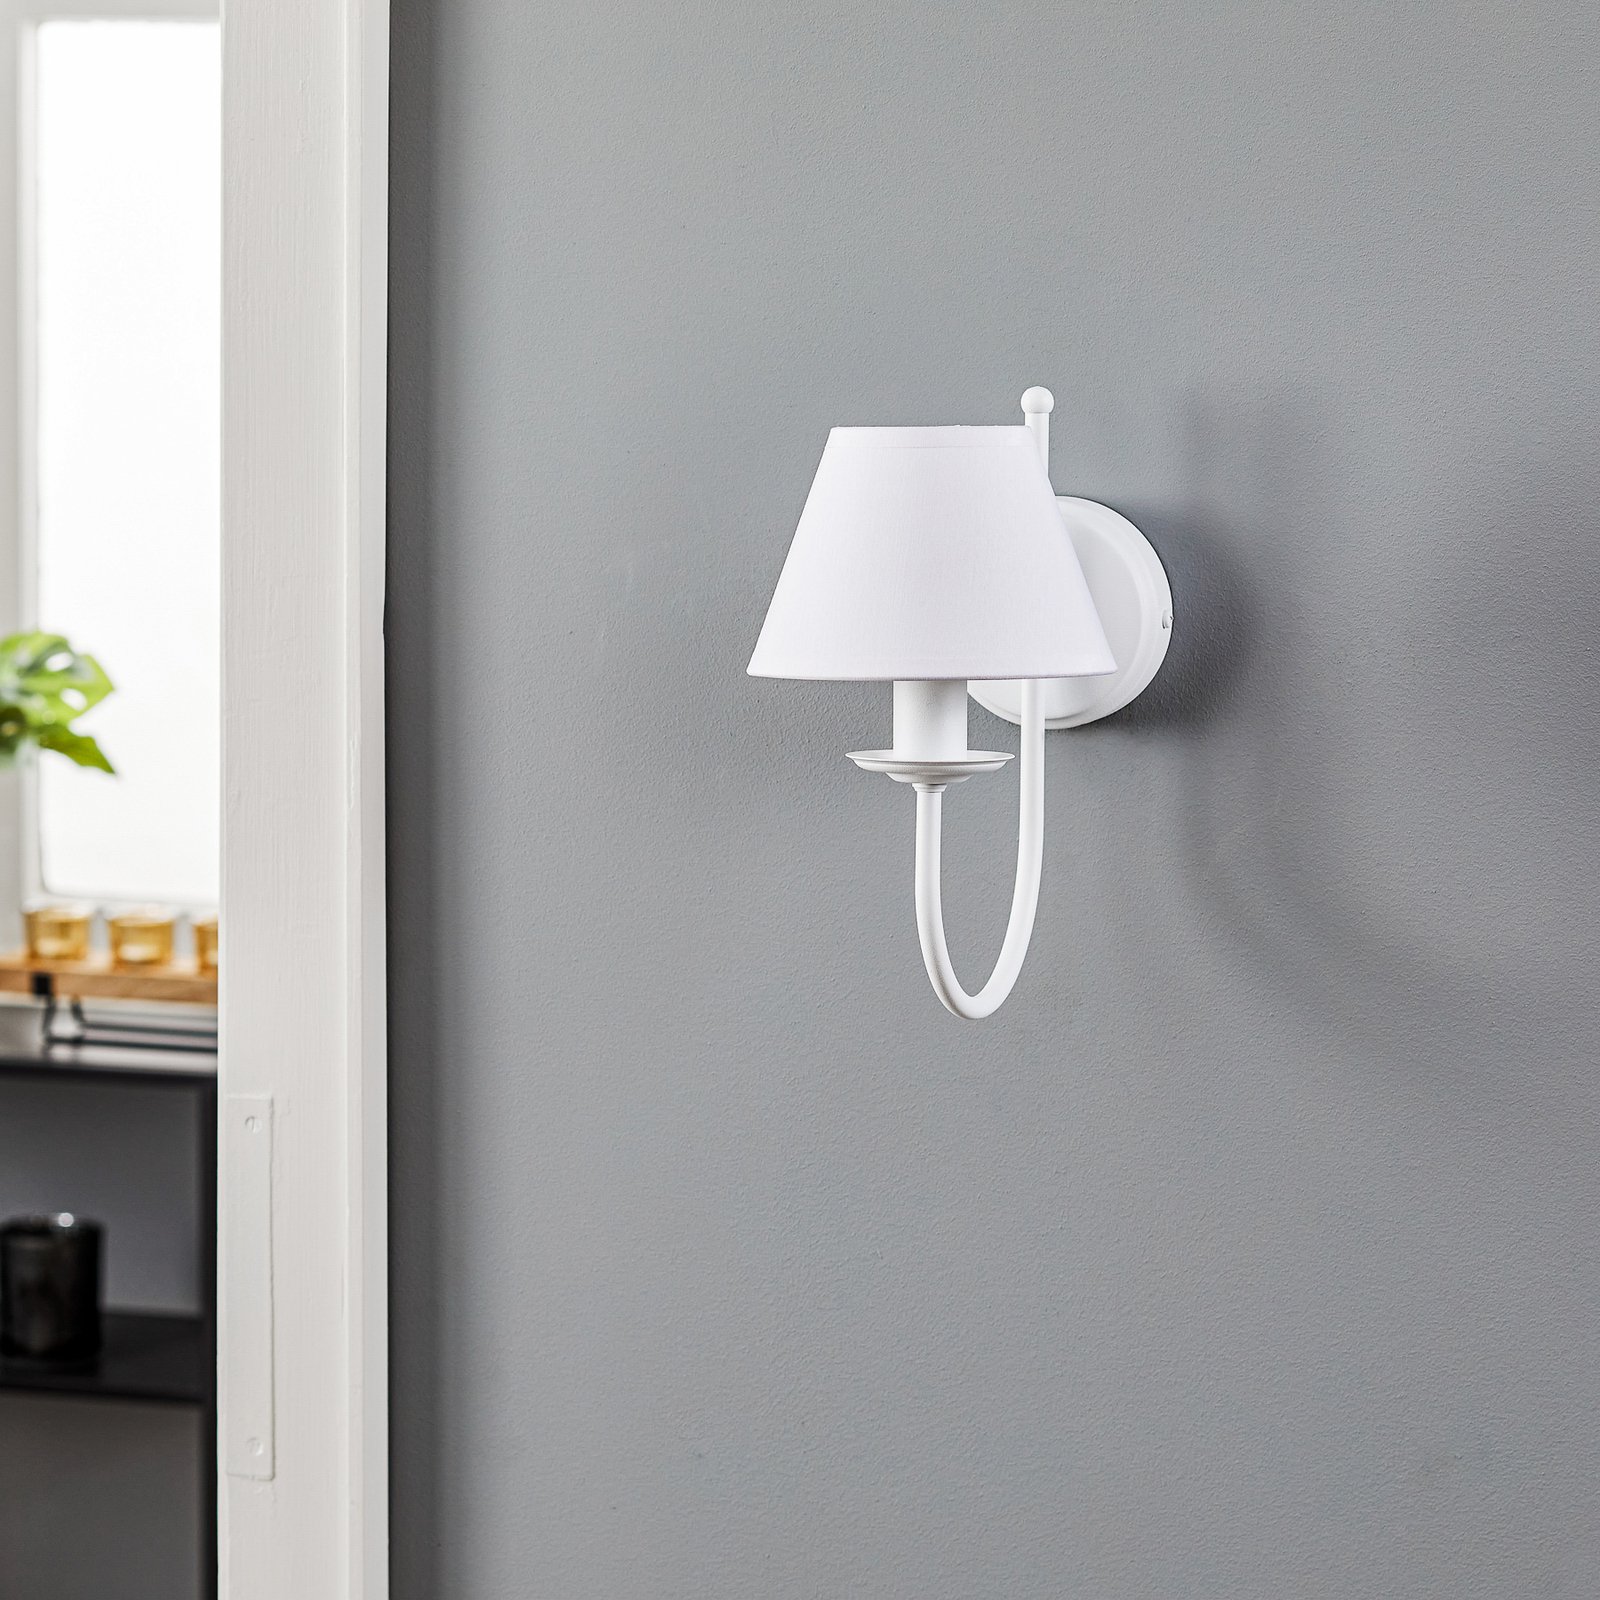 Bona wall light, one-bulb, white